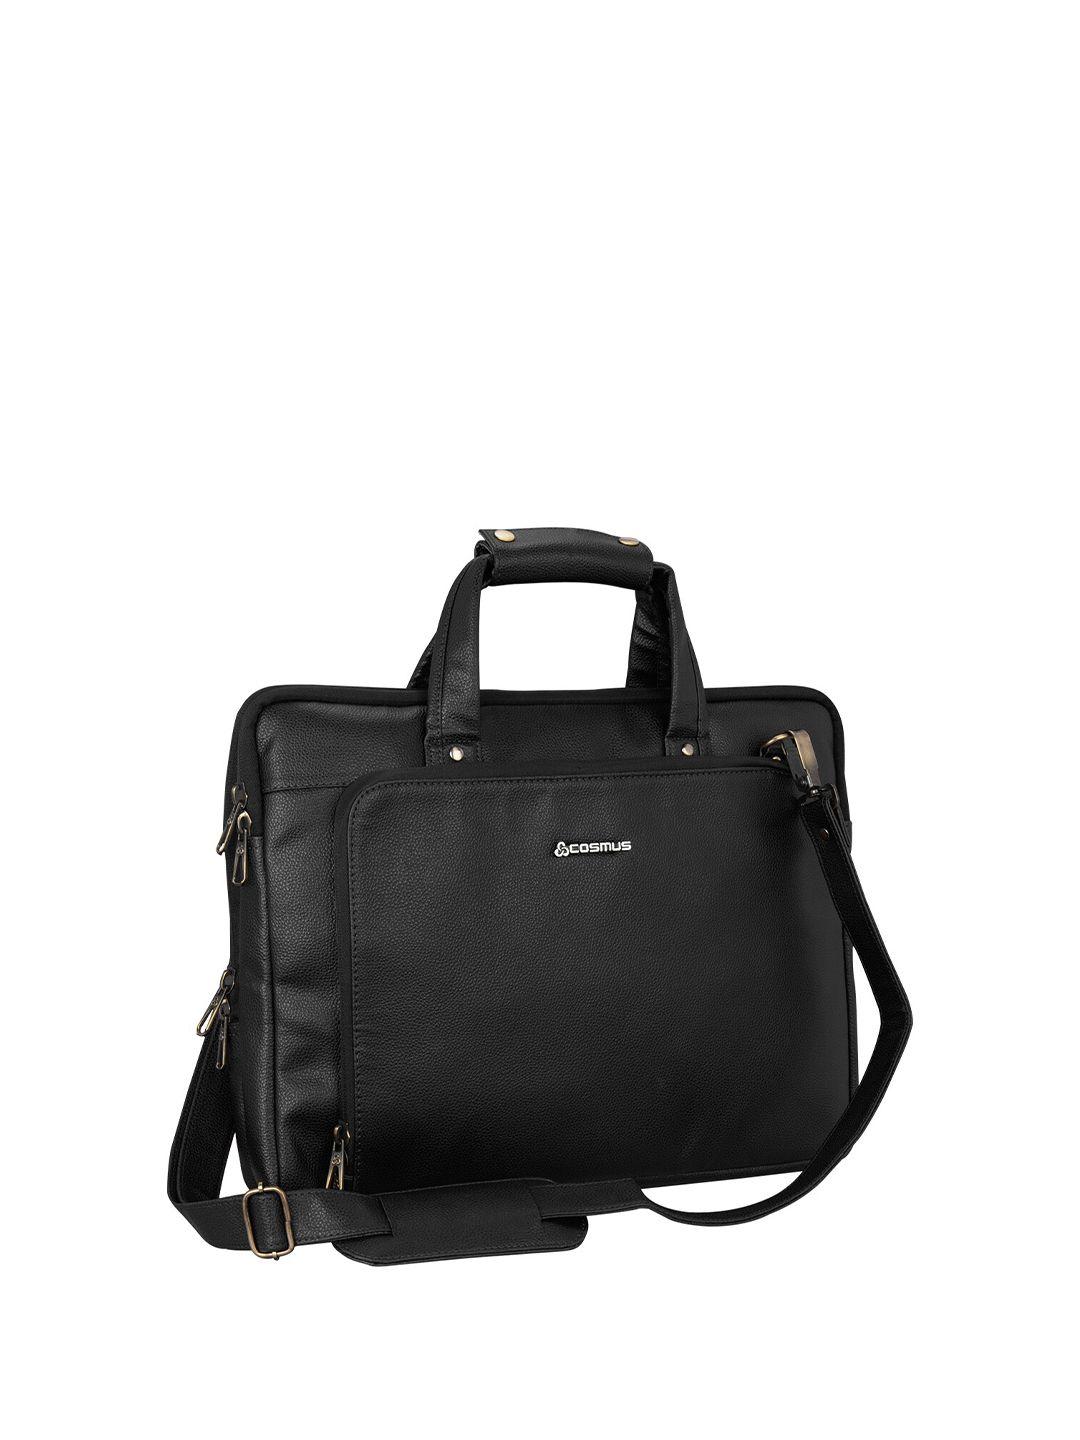 cosmus unisex black 14 inches laptop messenger bag